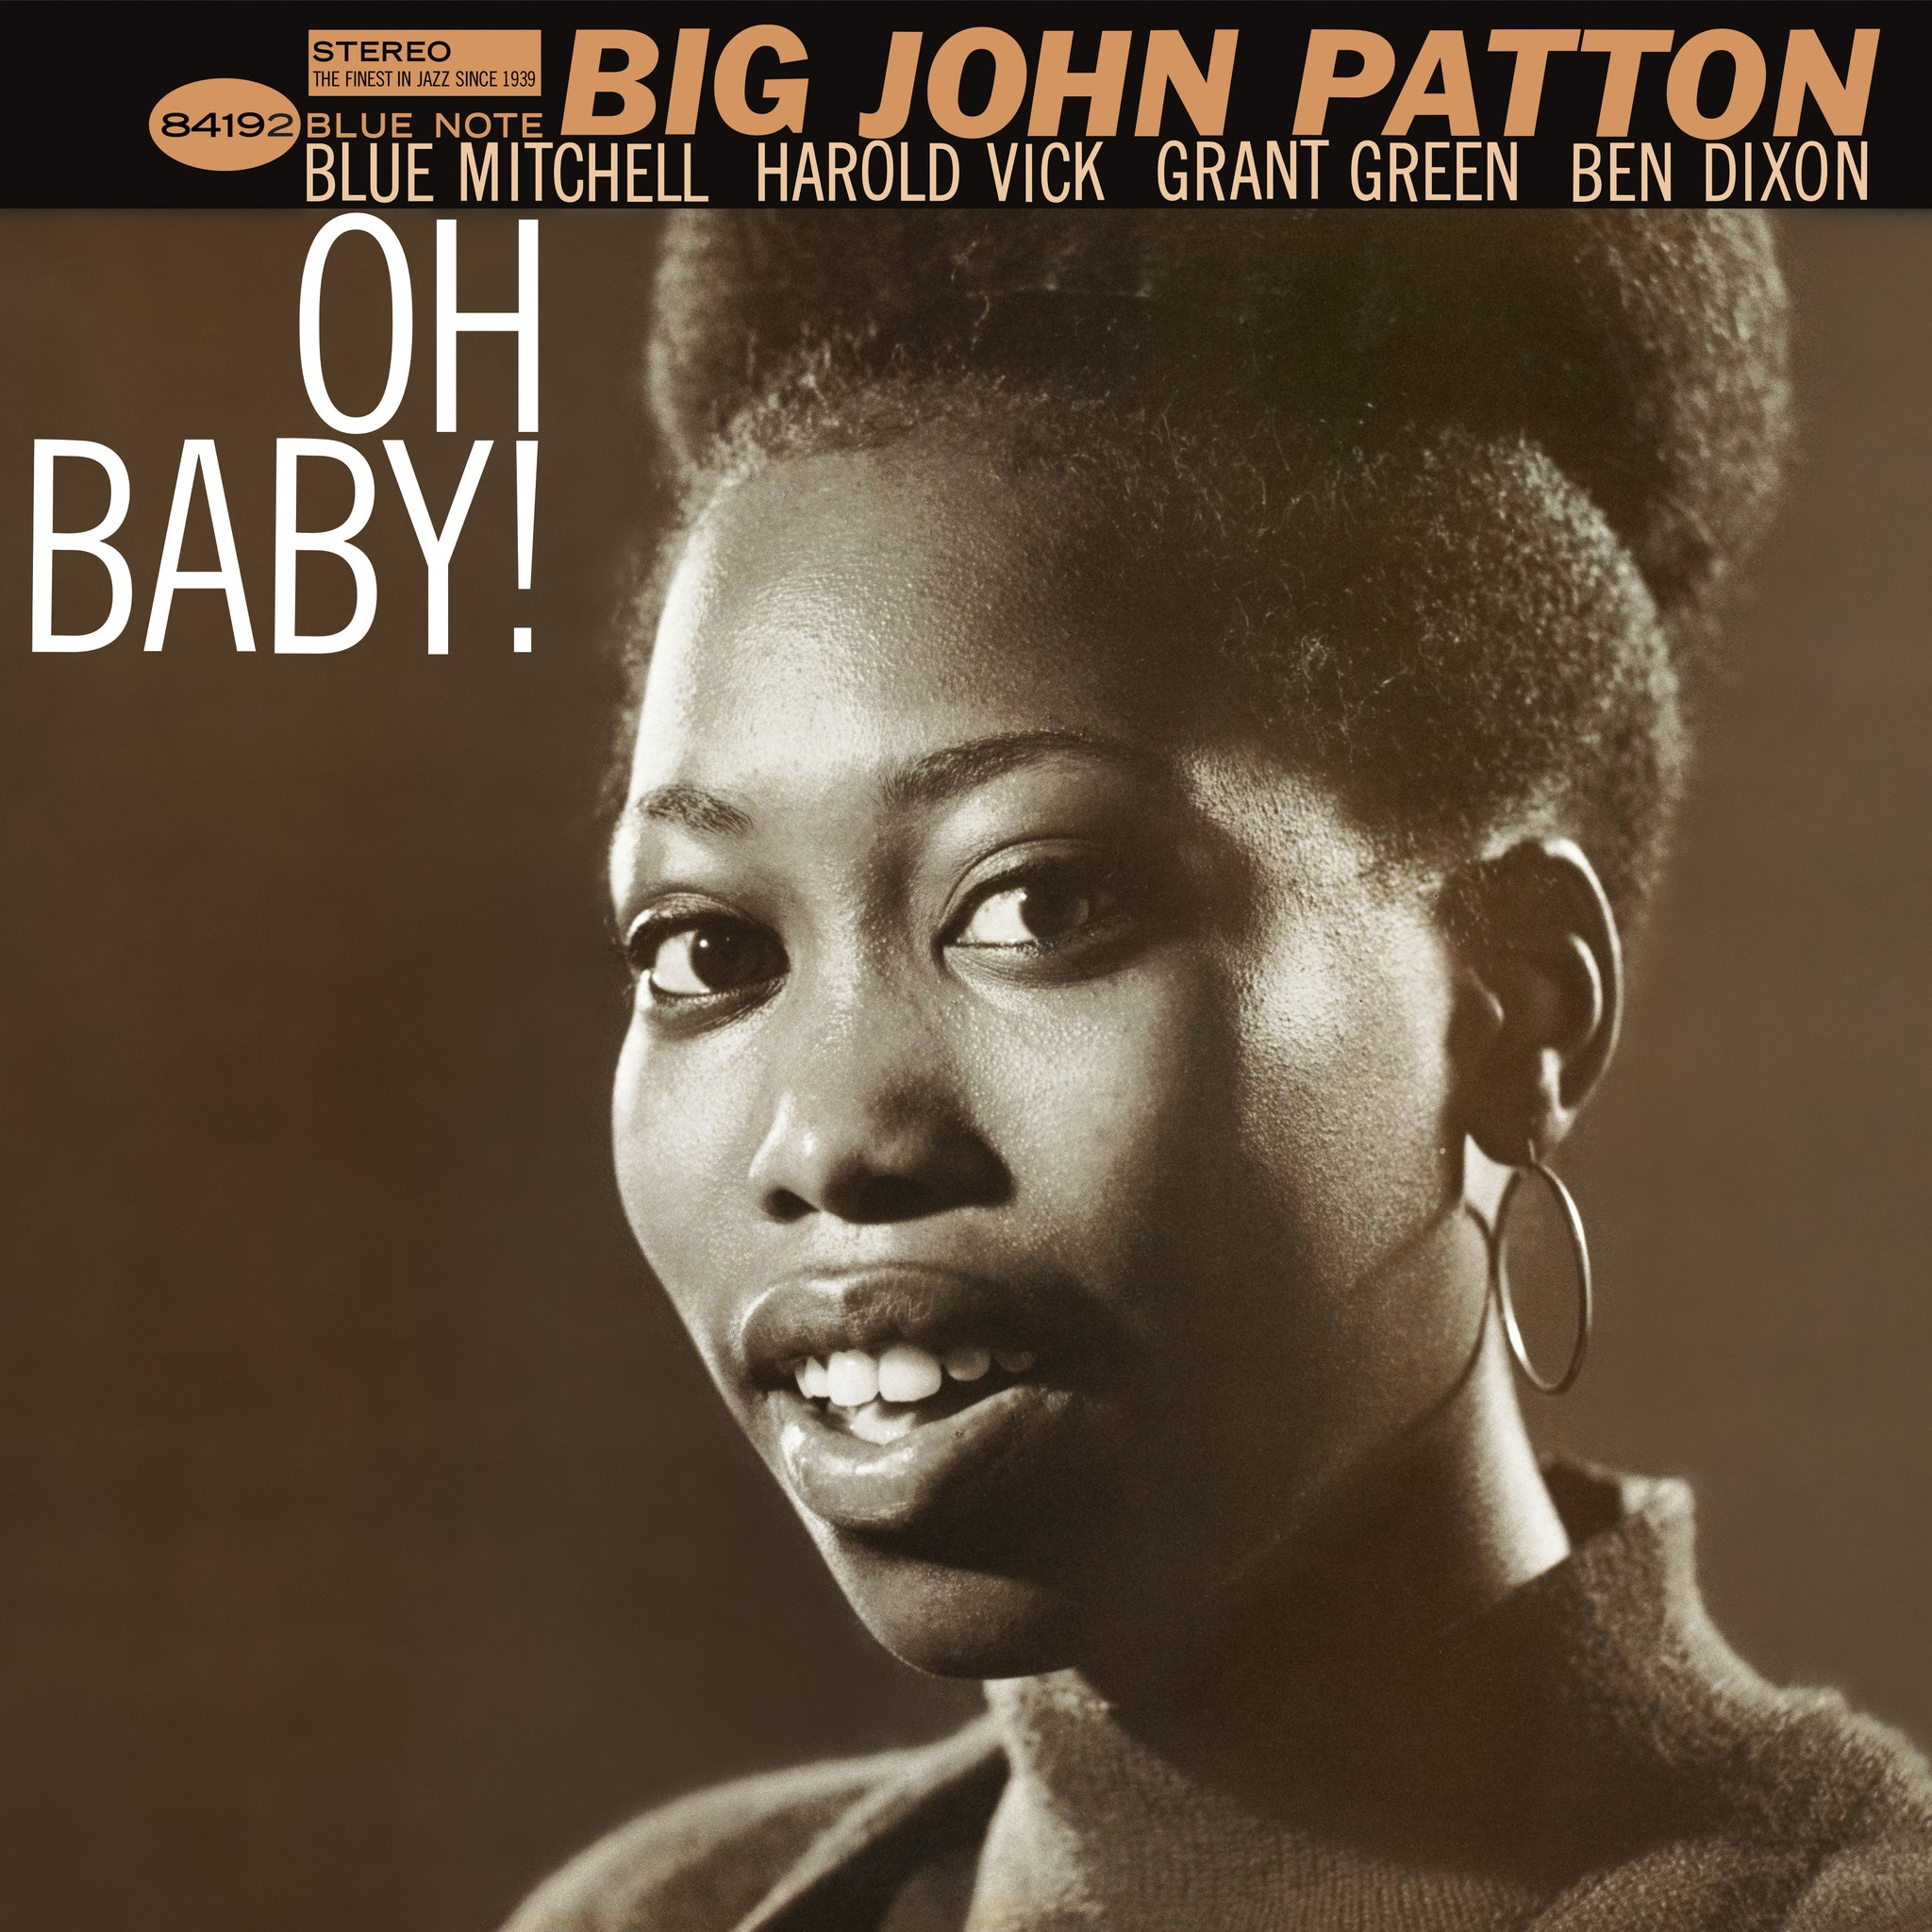 BIG JOHN PATTON - Oh Baby! (Blue Note Classic Vinyl Series) - LP - 180g Vinyl